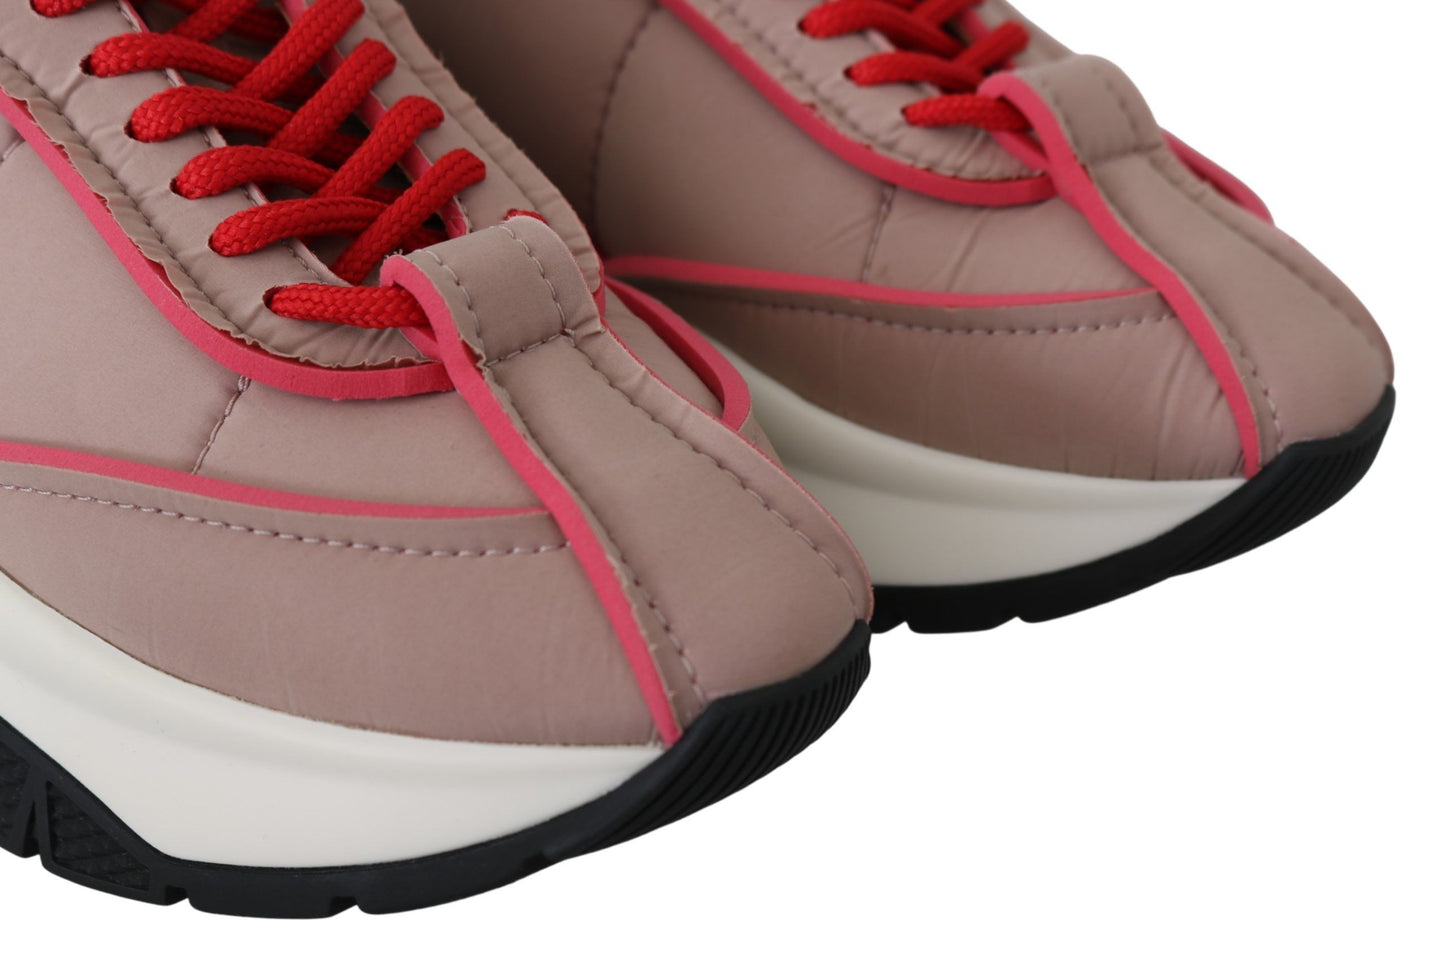 Jimmy Choo Ballet Pink und Red Raine Sneakers